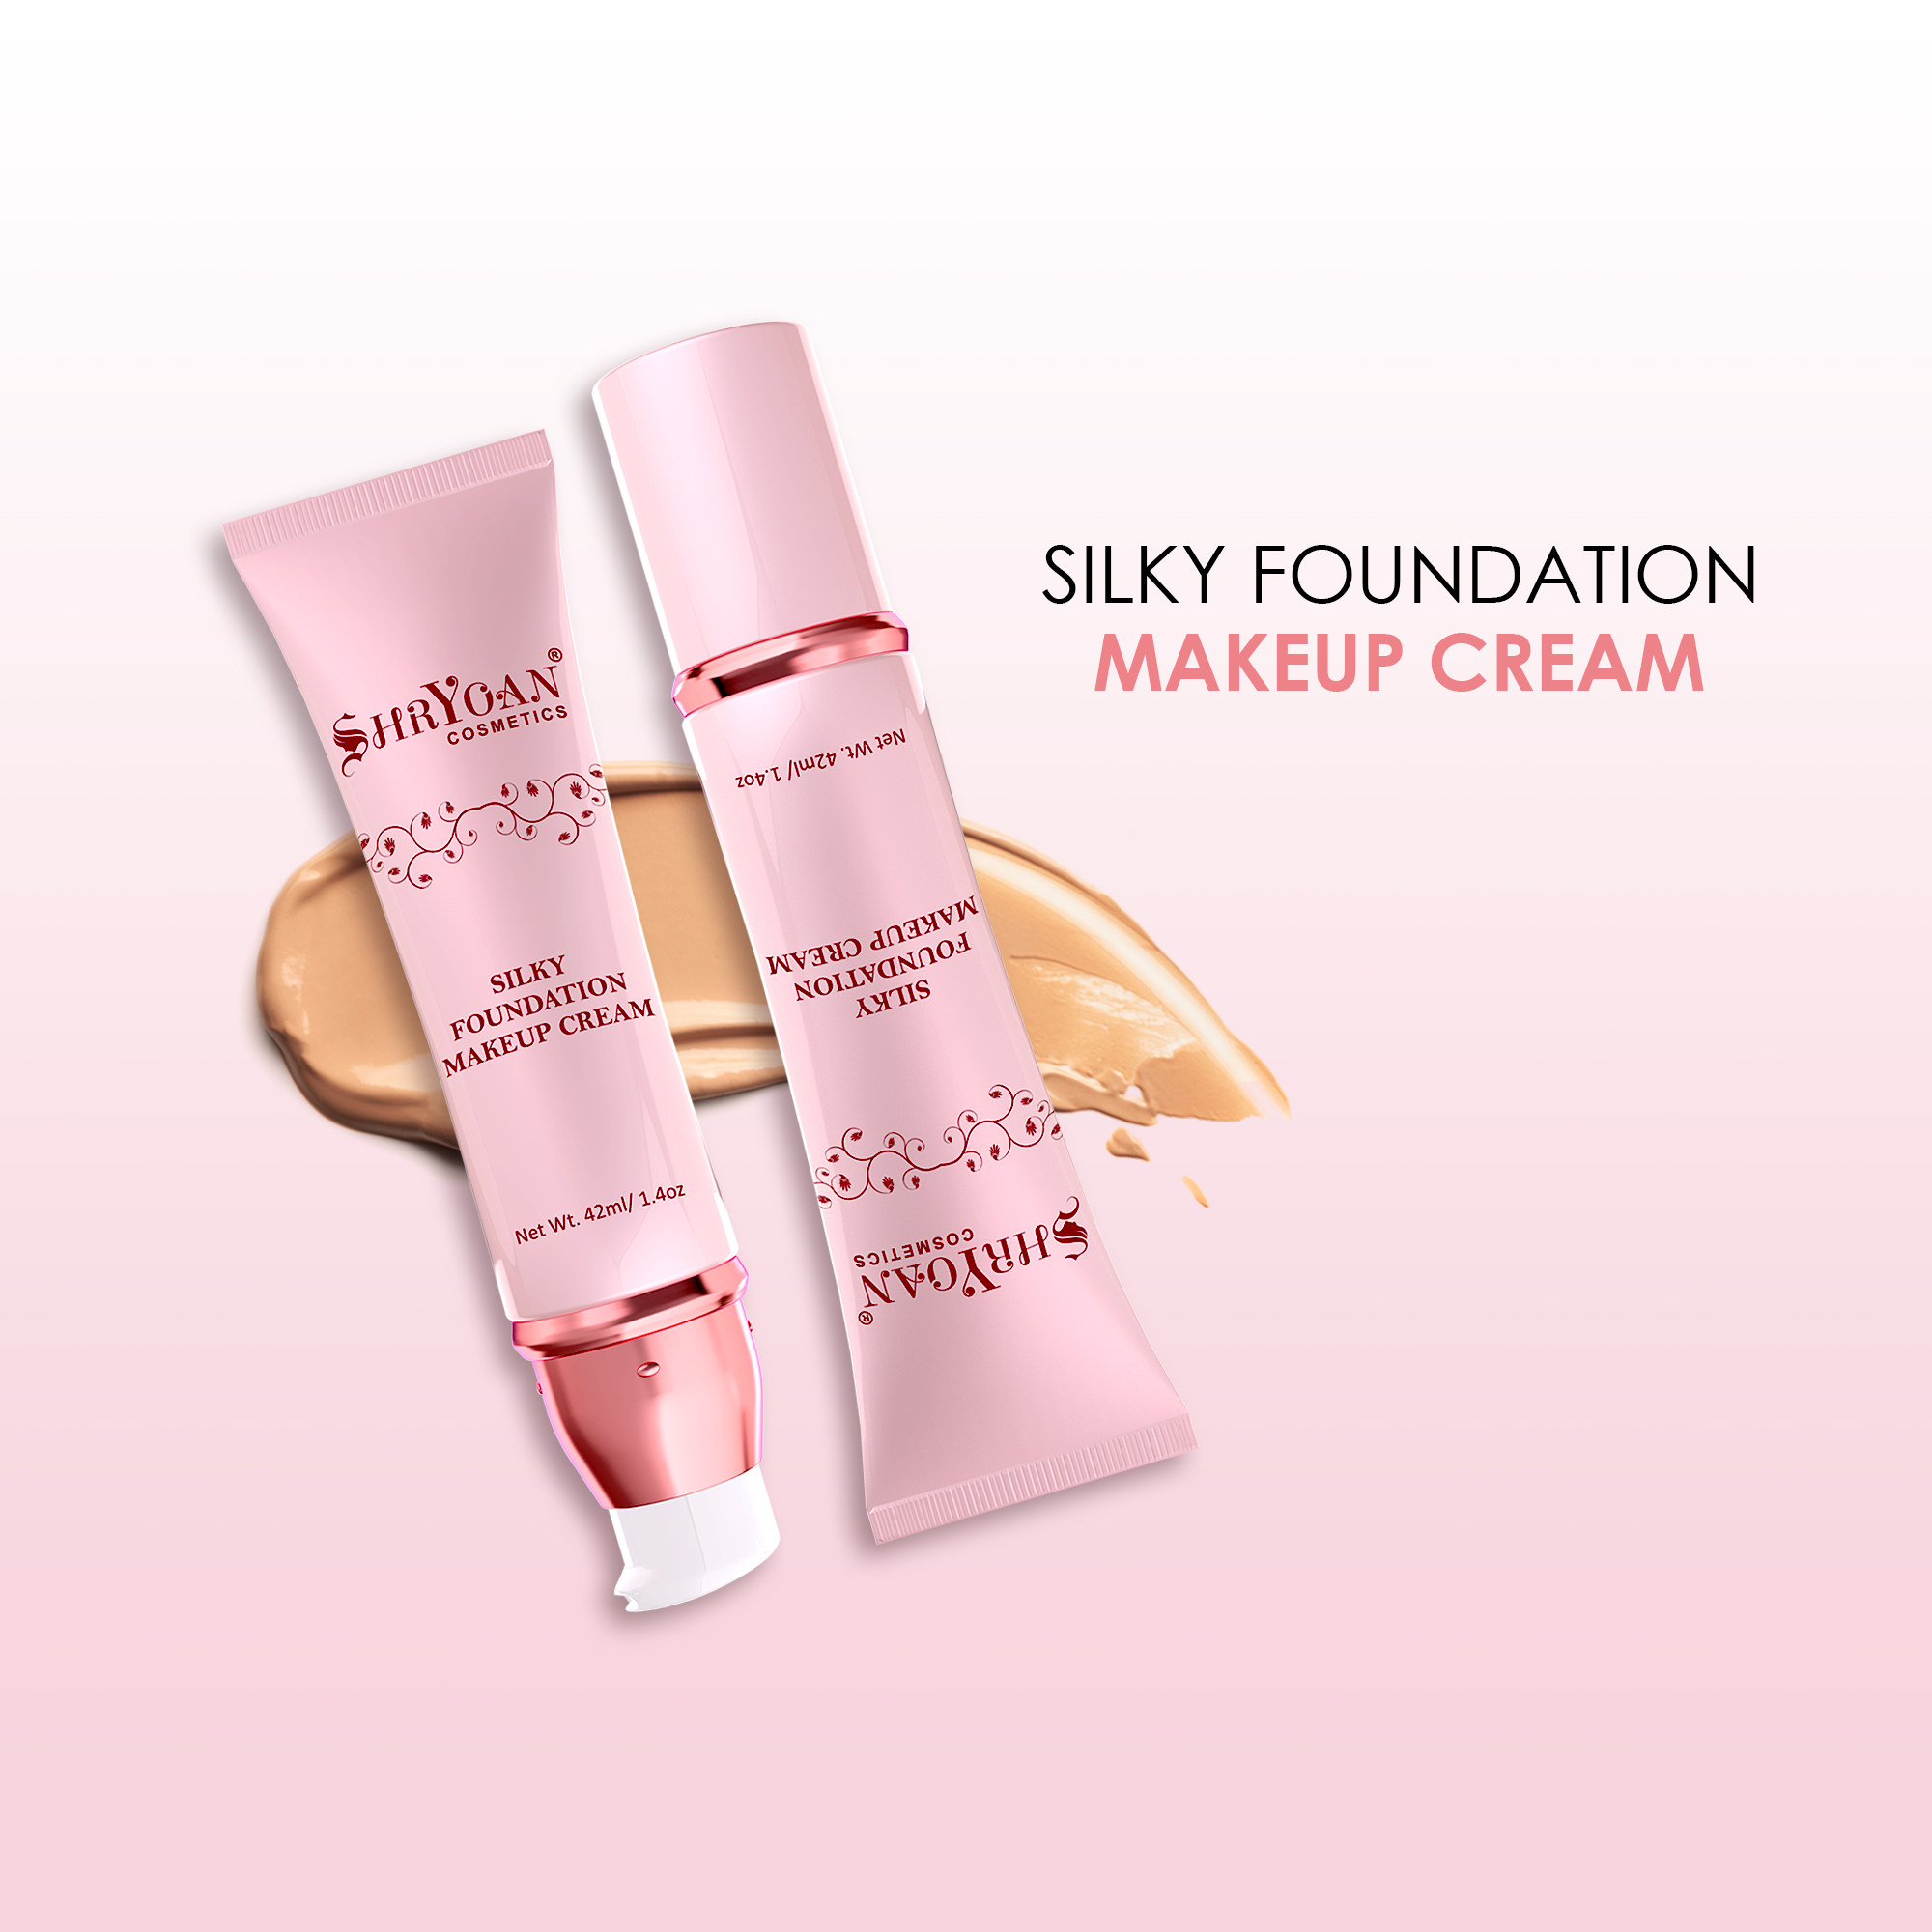 Shryoan Silky Foundation Makeup Cream